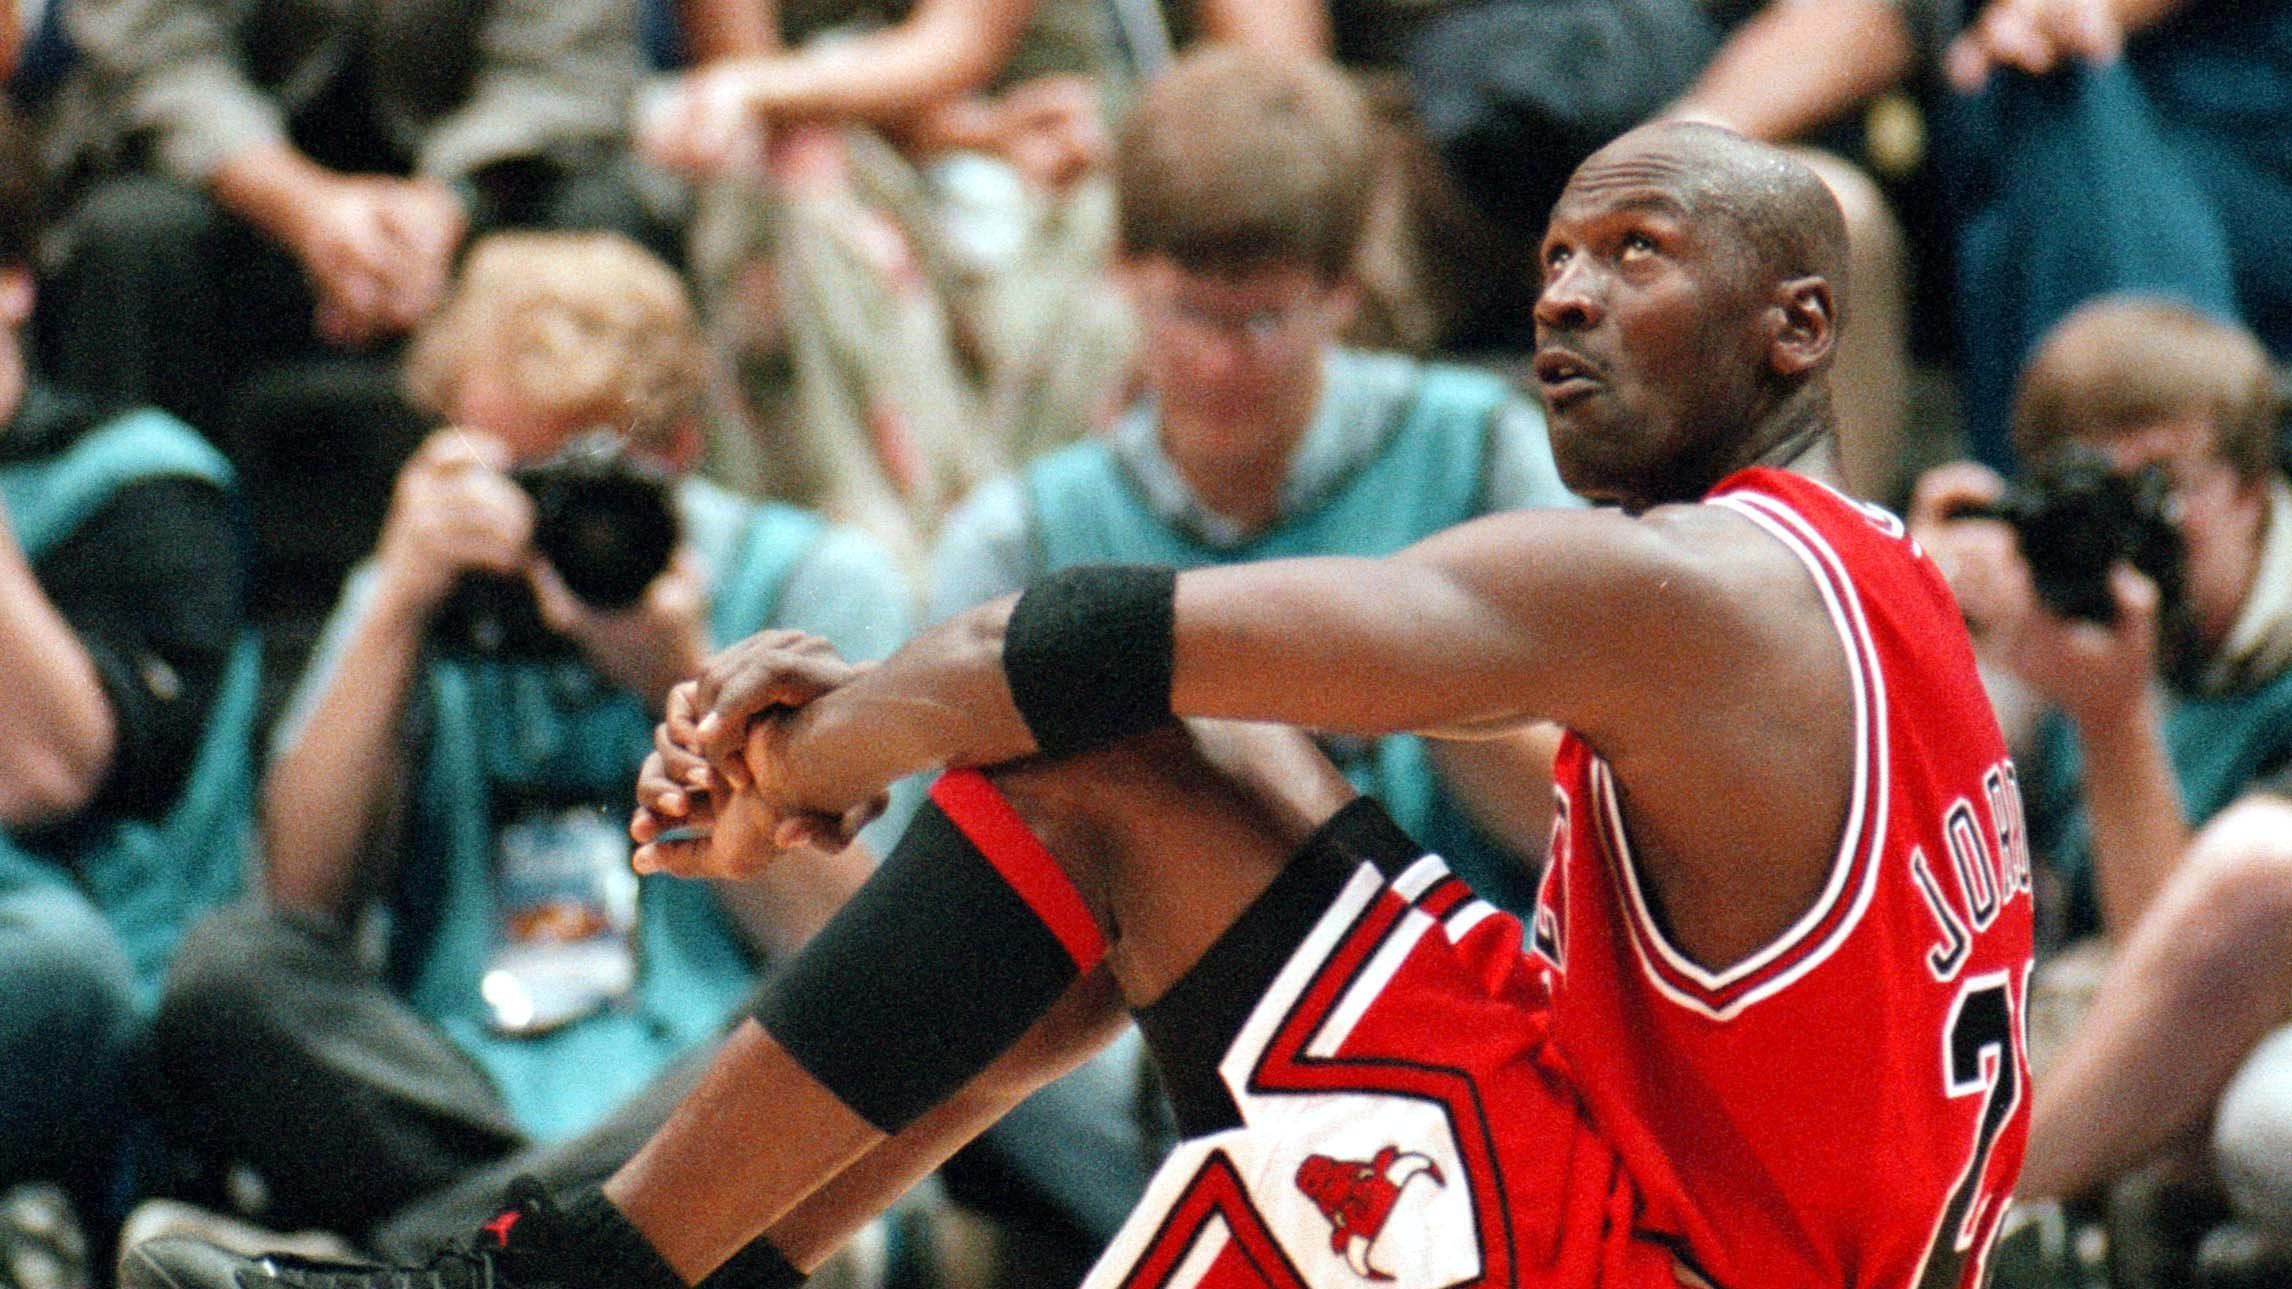 Jud Buechler and Michael Jordan of the Chicago Bulls high five